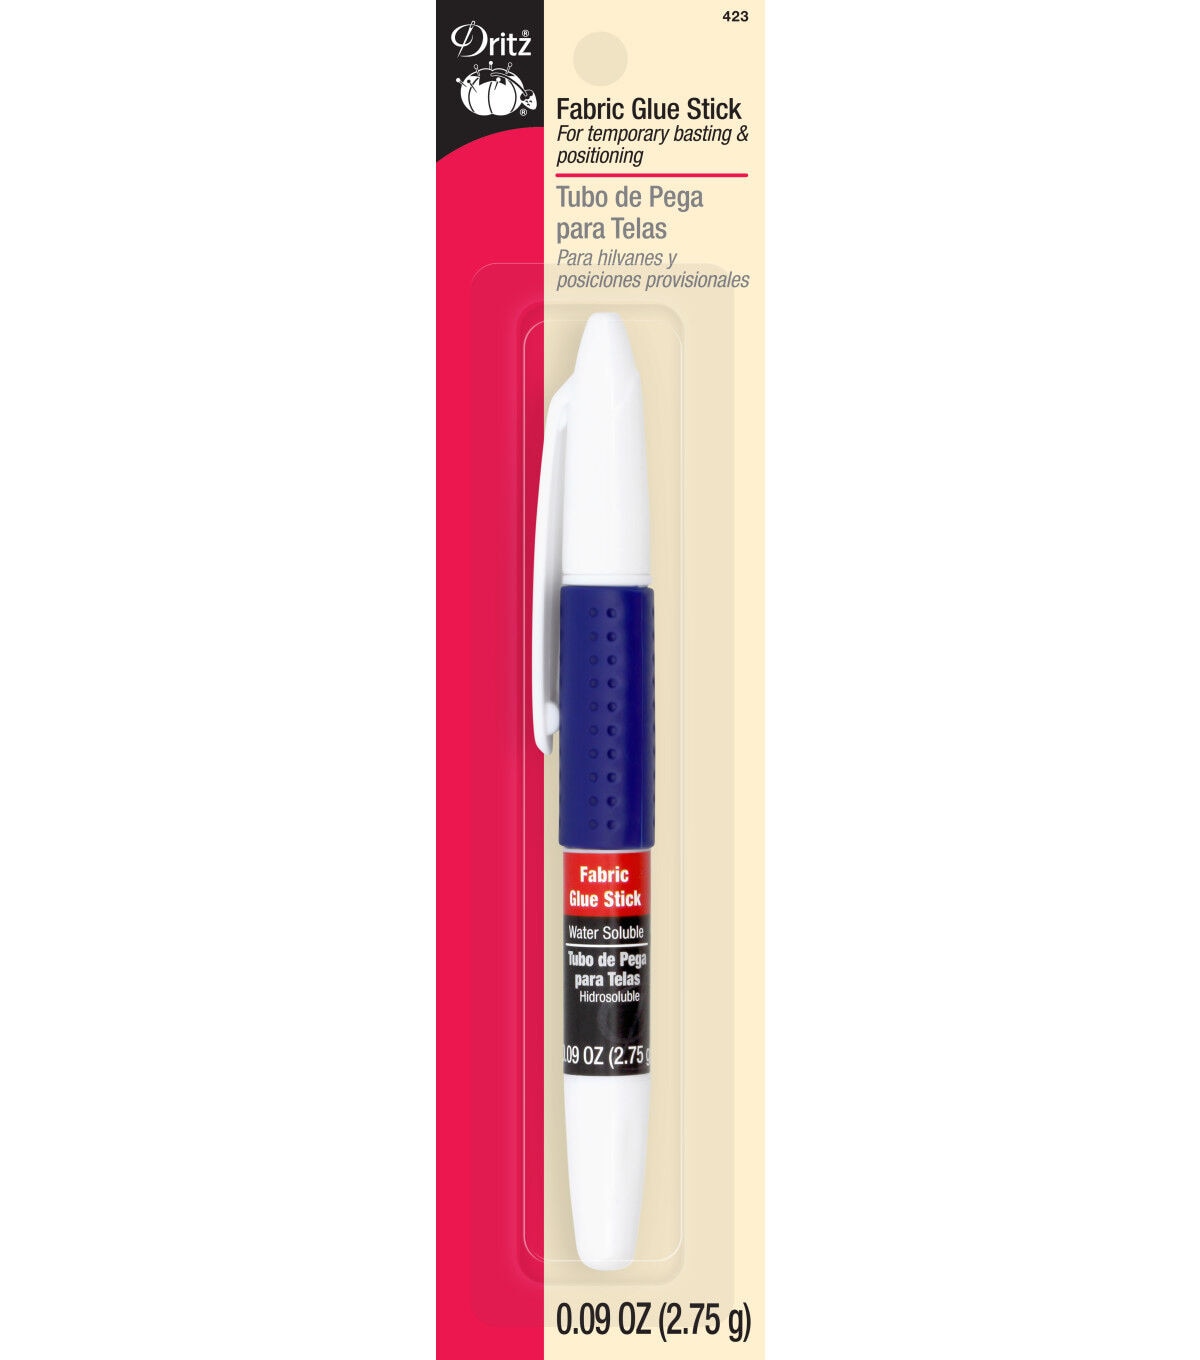 Dritz Fabric Glue Stick Pen, 0.09 oz. by Dritz